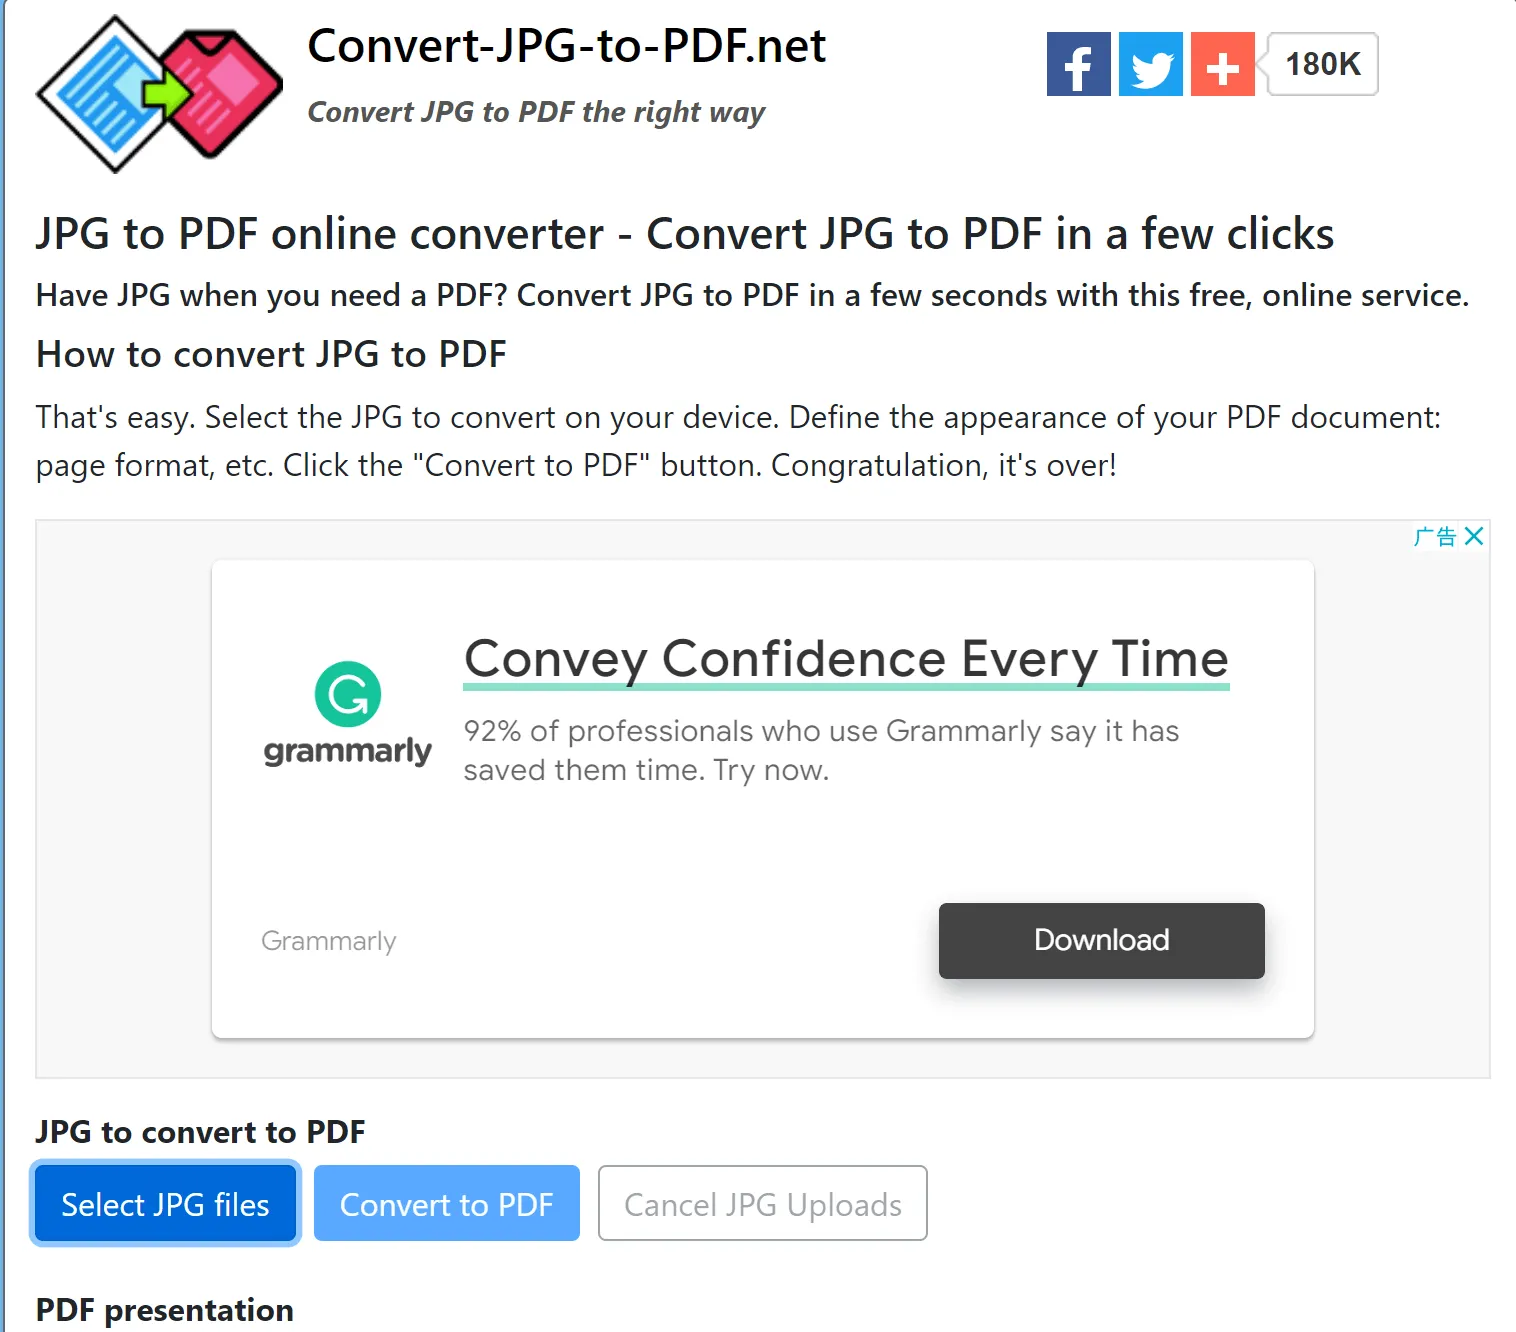 Convert-JPG-to-PDF.net